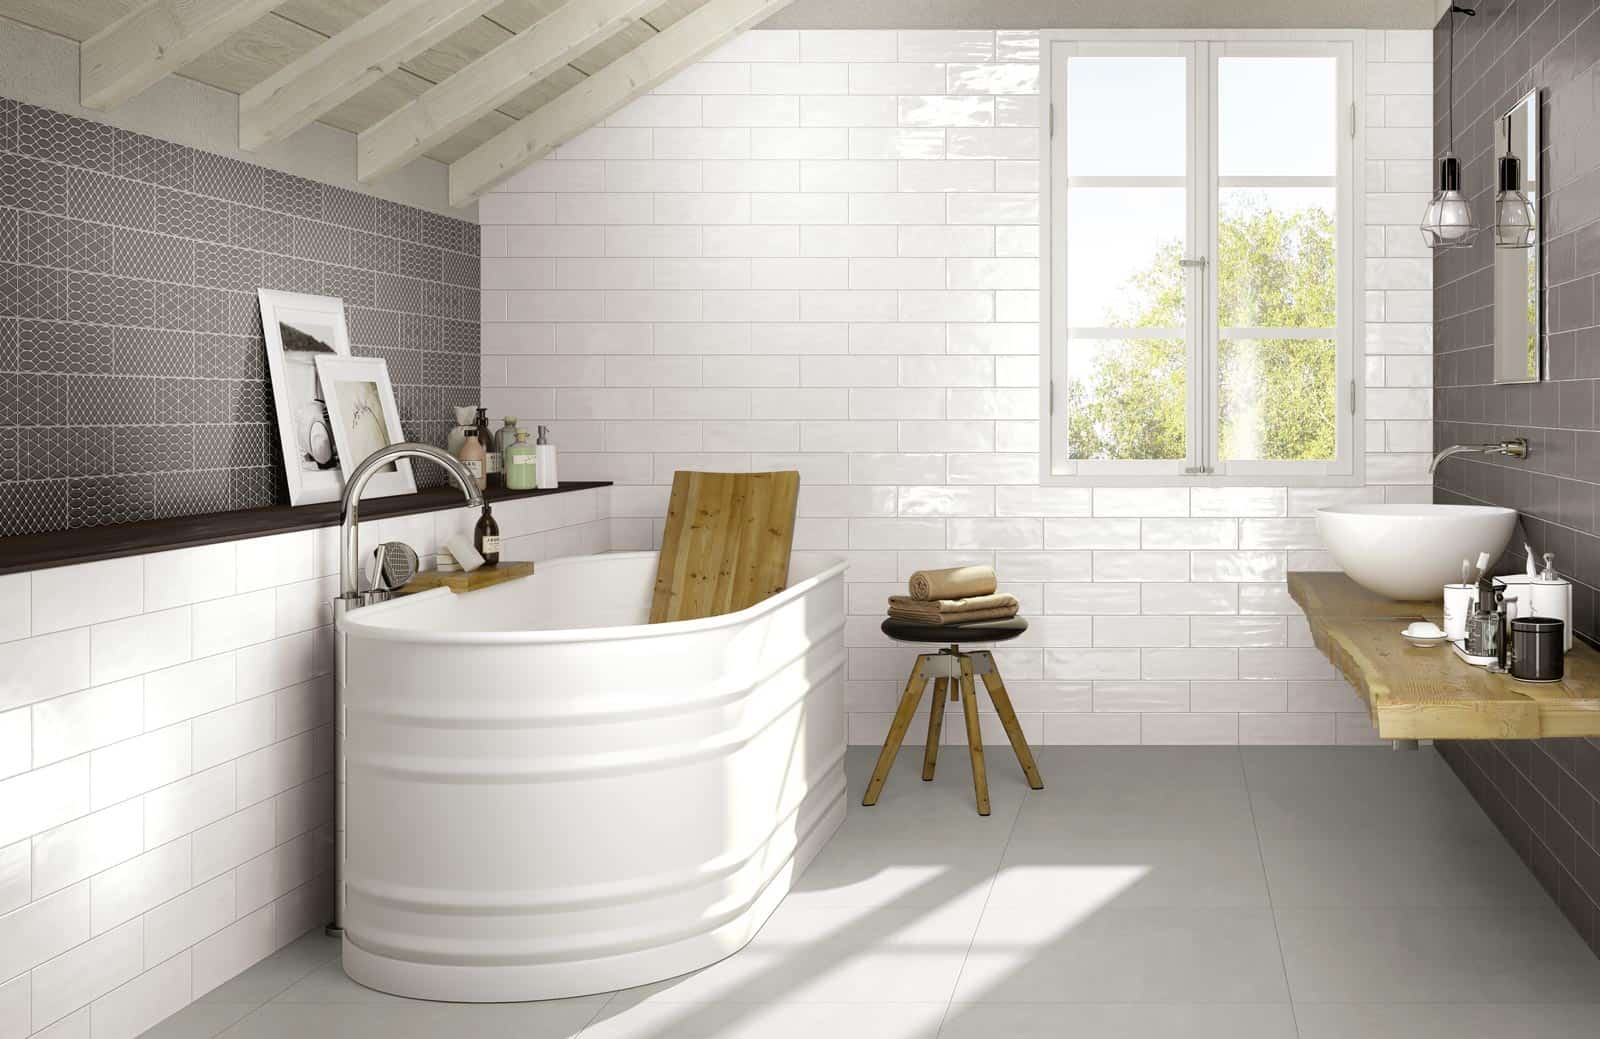 tiling-walls-in-brick-pattern-ragno-3-bathroom-modern.jpg